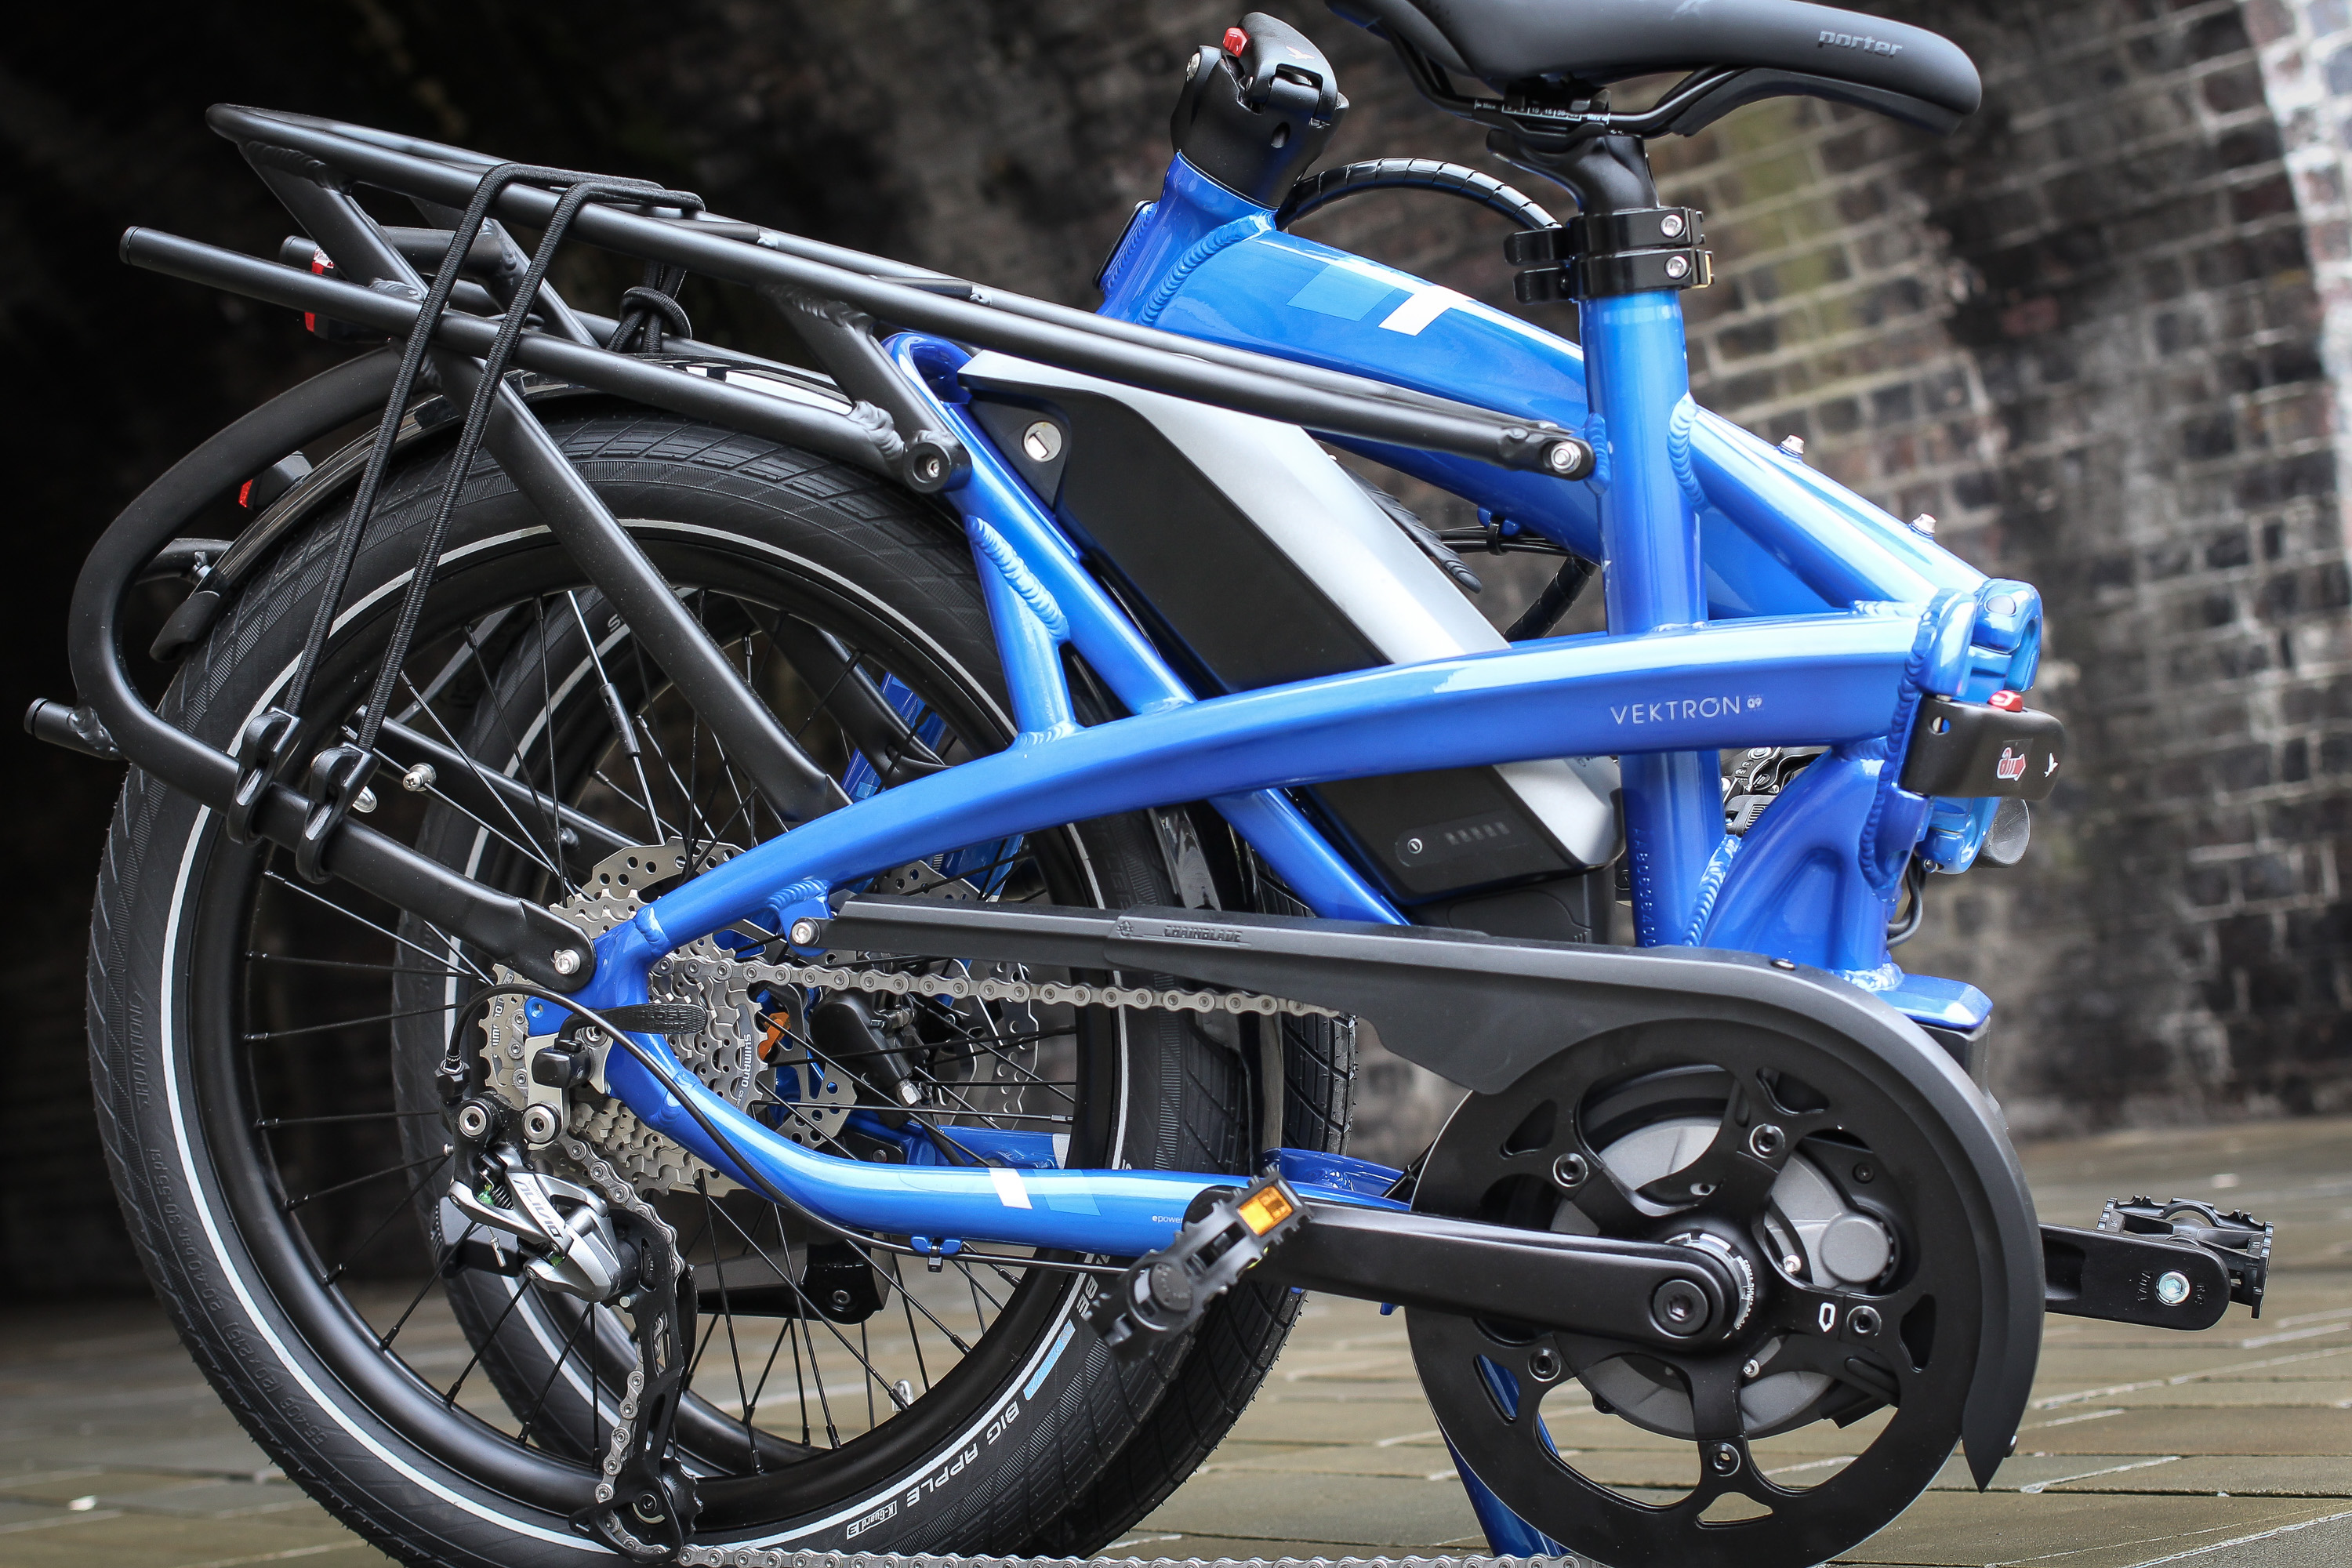 Tern electric bike review: Tern Vektron Q9